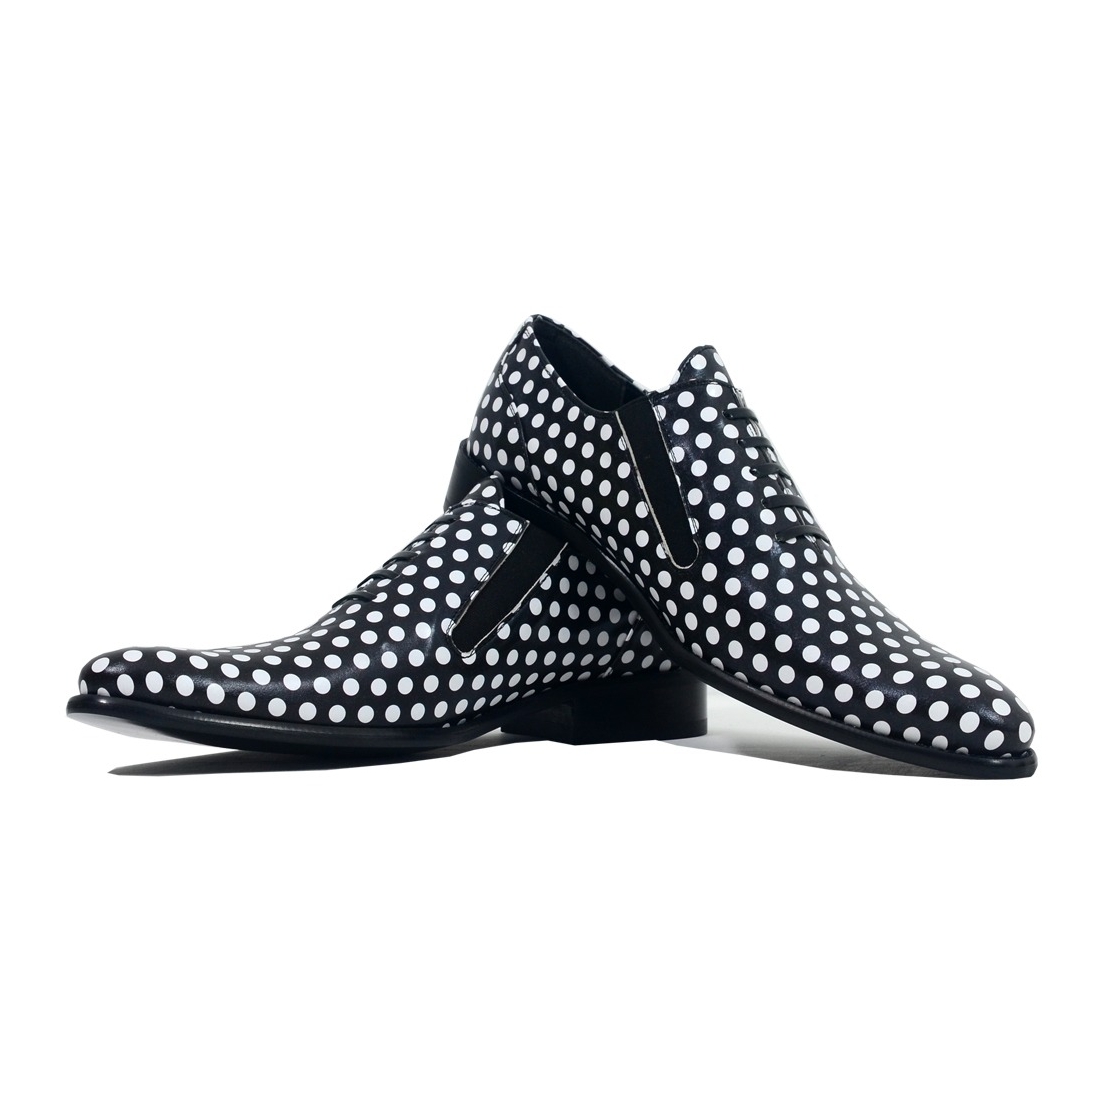 Modello Duphero - Loafers & Slip-Ons - Handmade Colorful Italian Leather Shoes